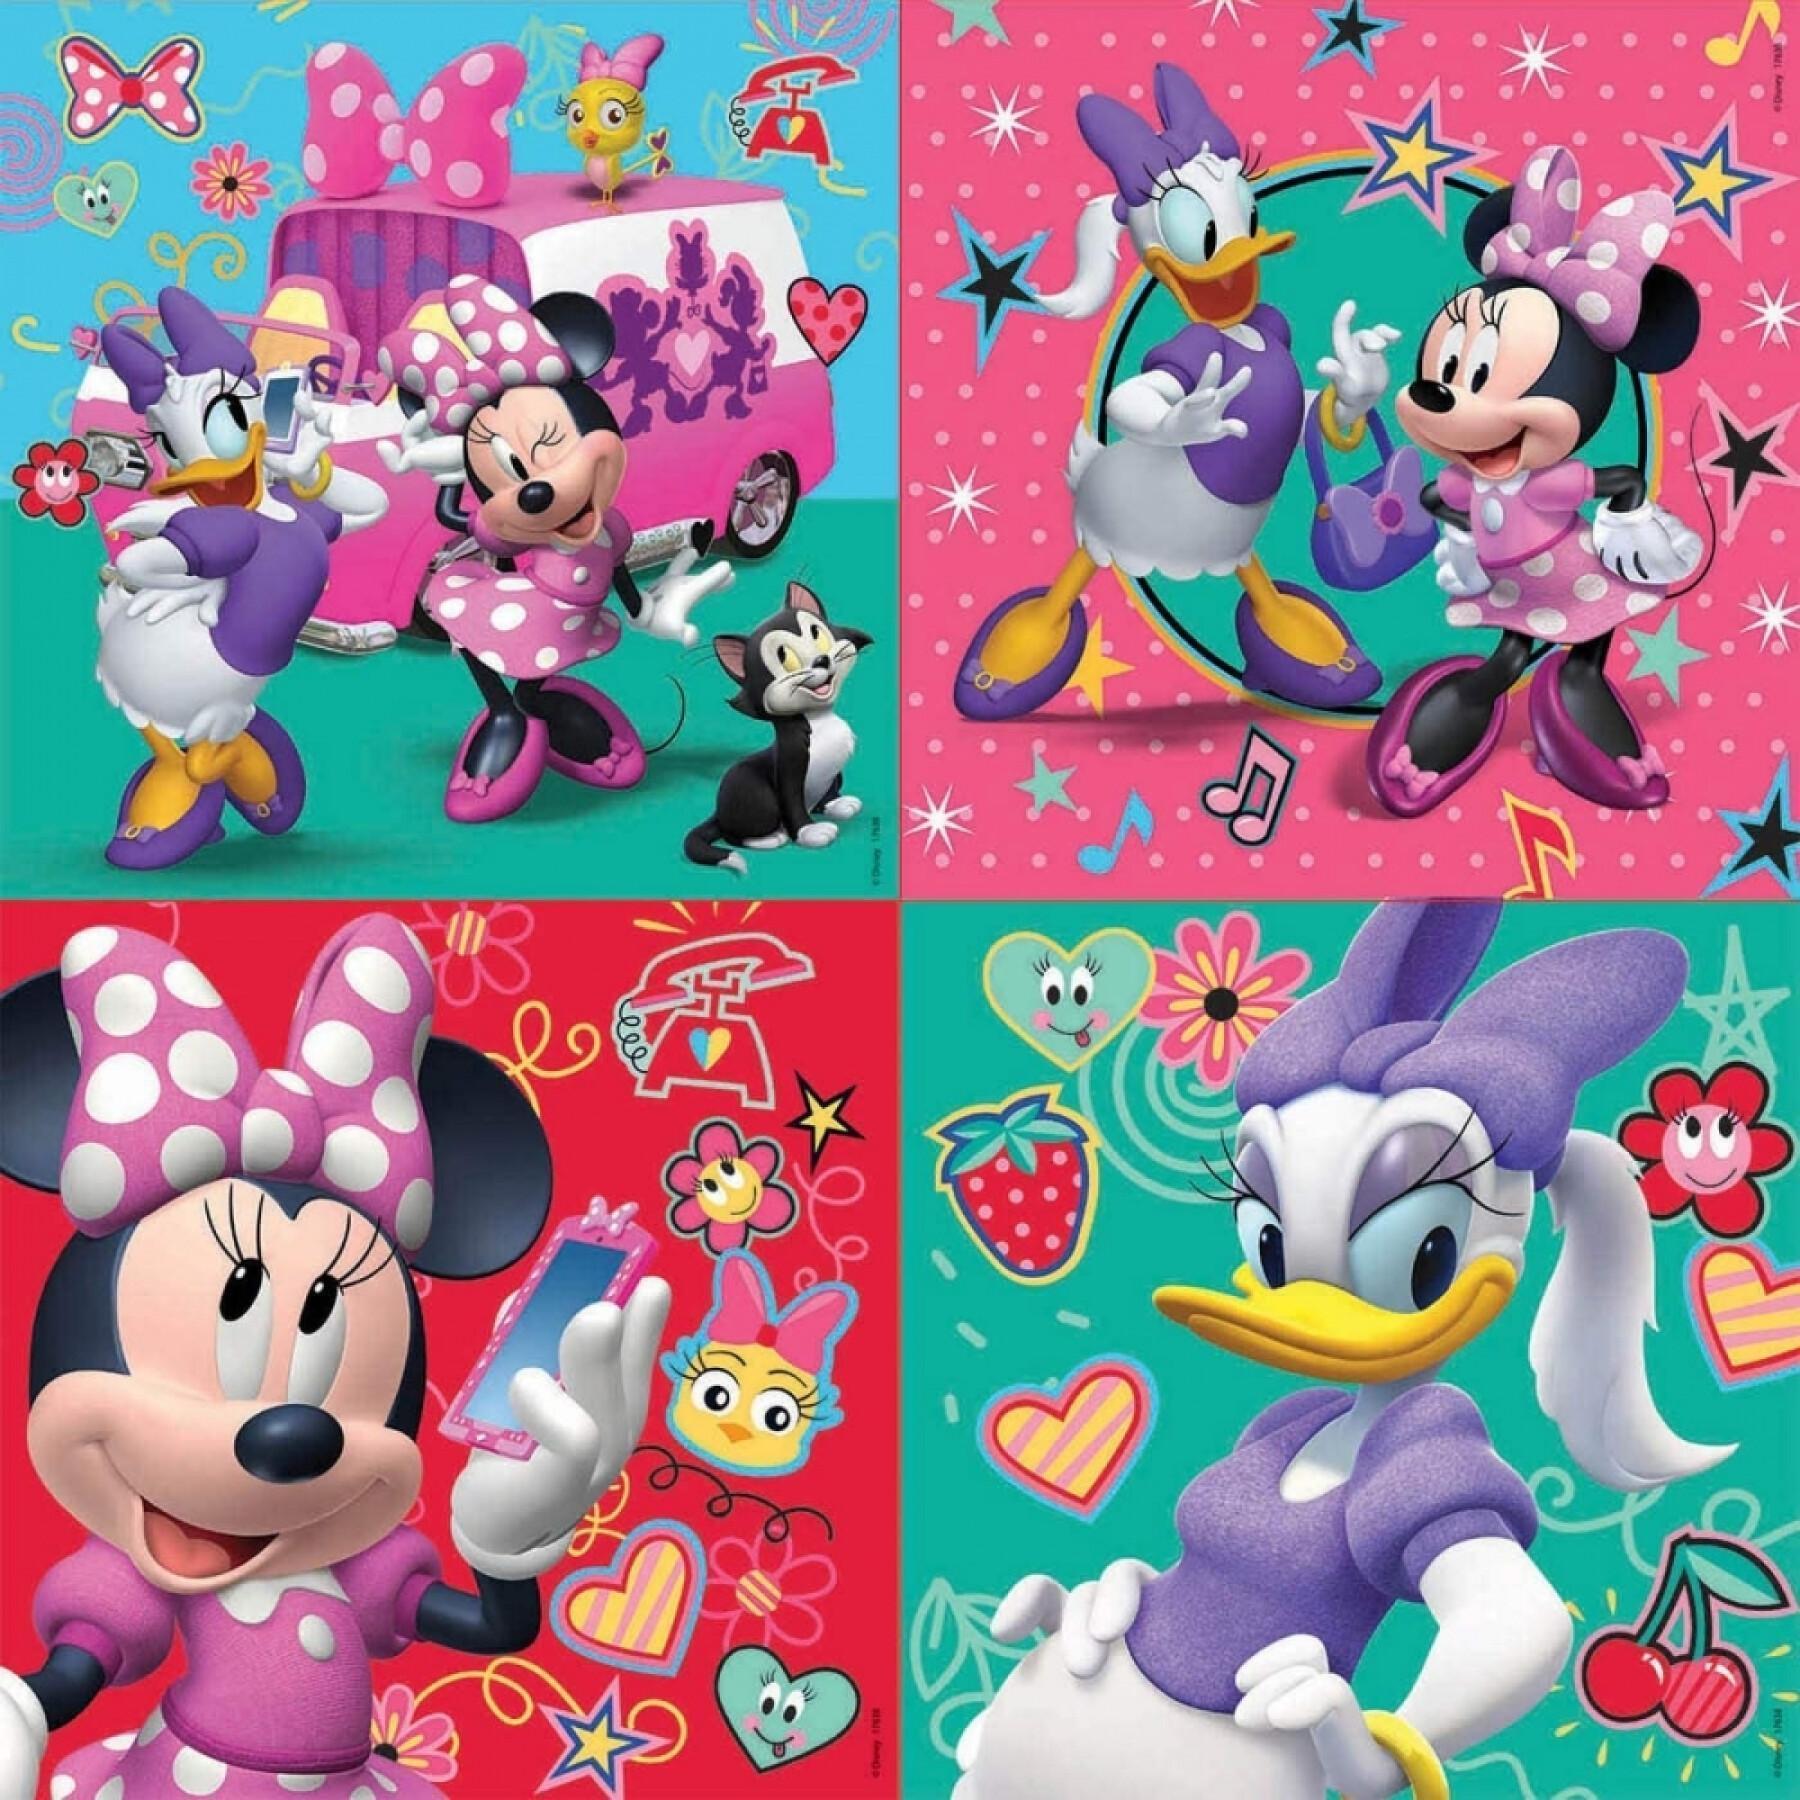 12-16-20-25 piece progressive puzzle Disney Minnie